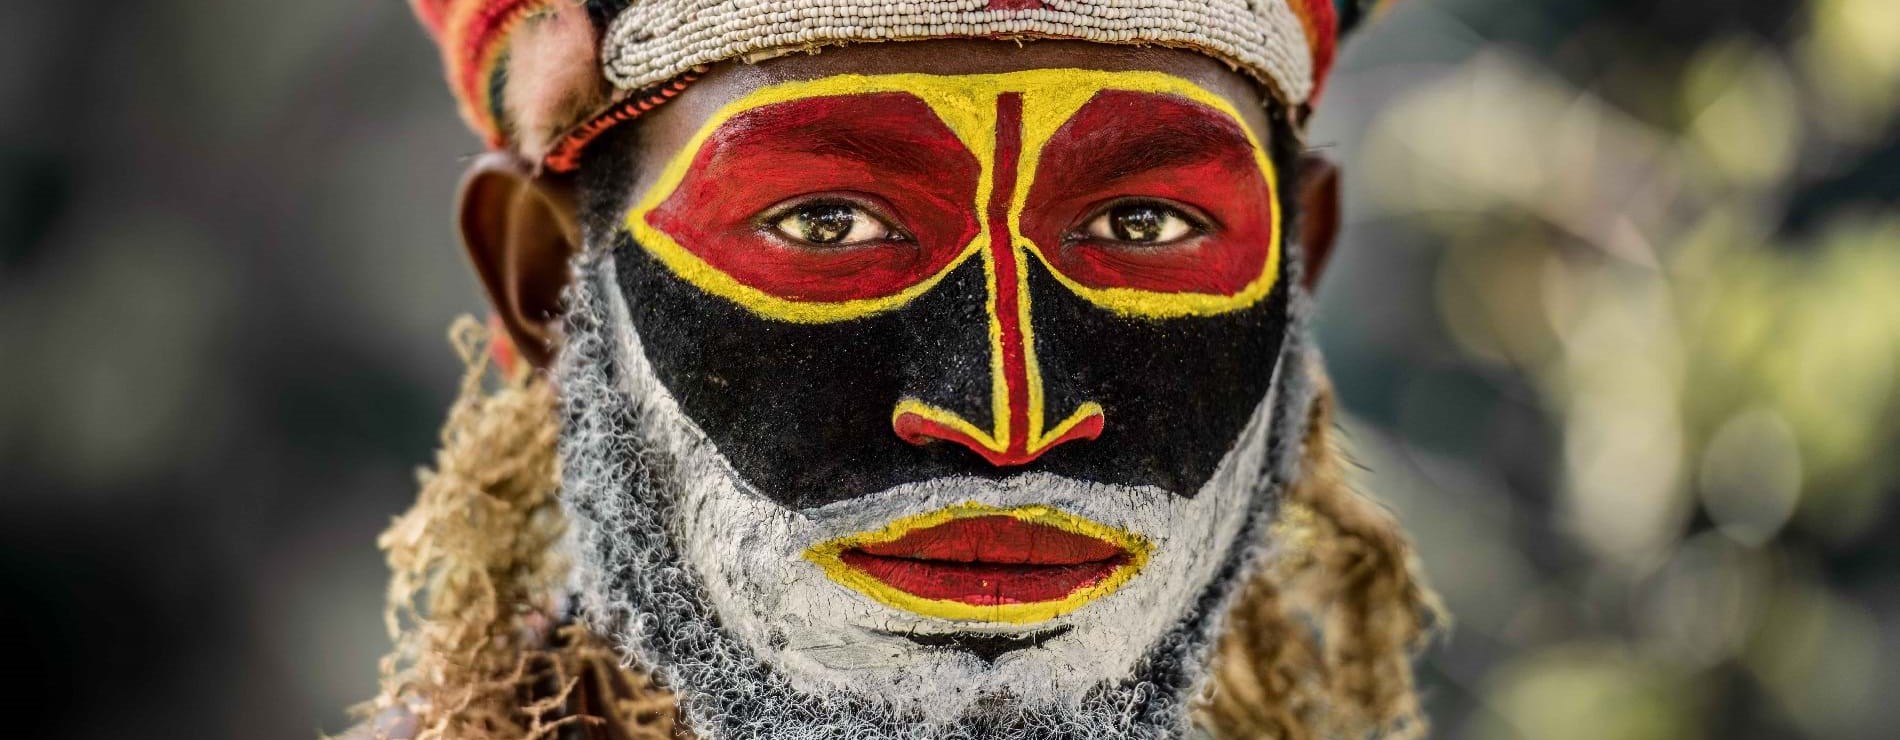 Papua New Guinea Man